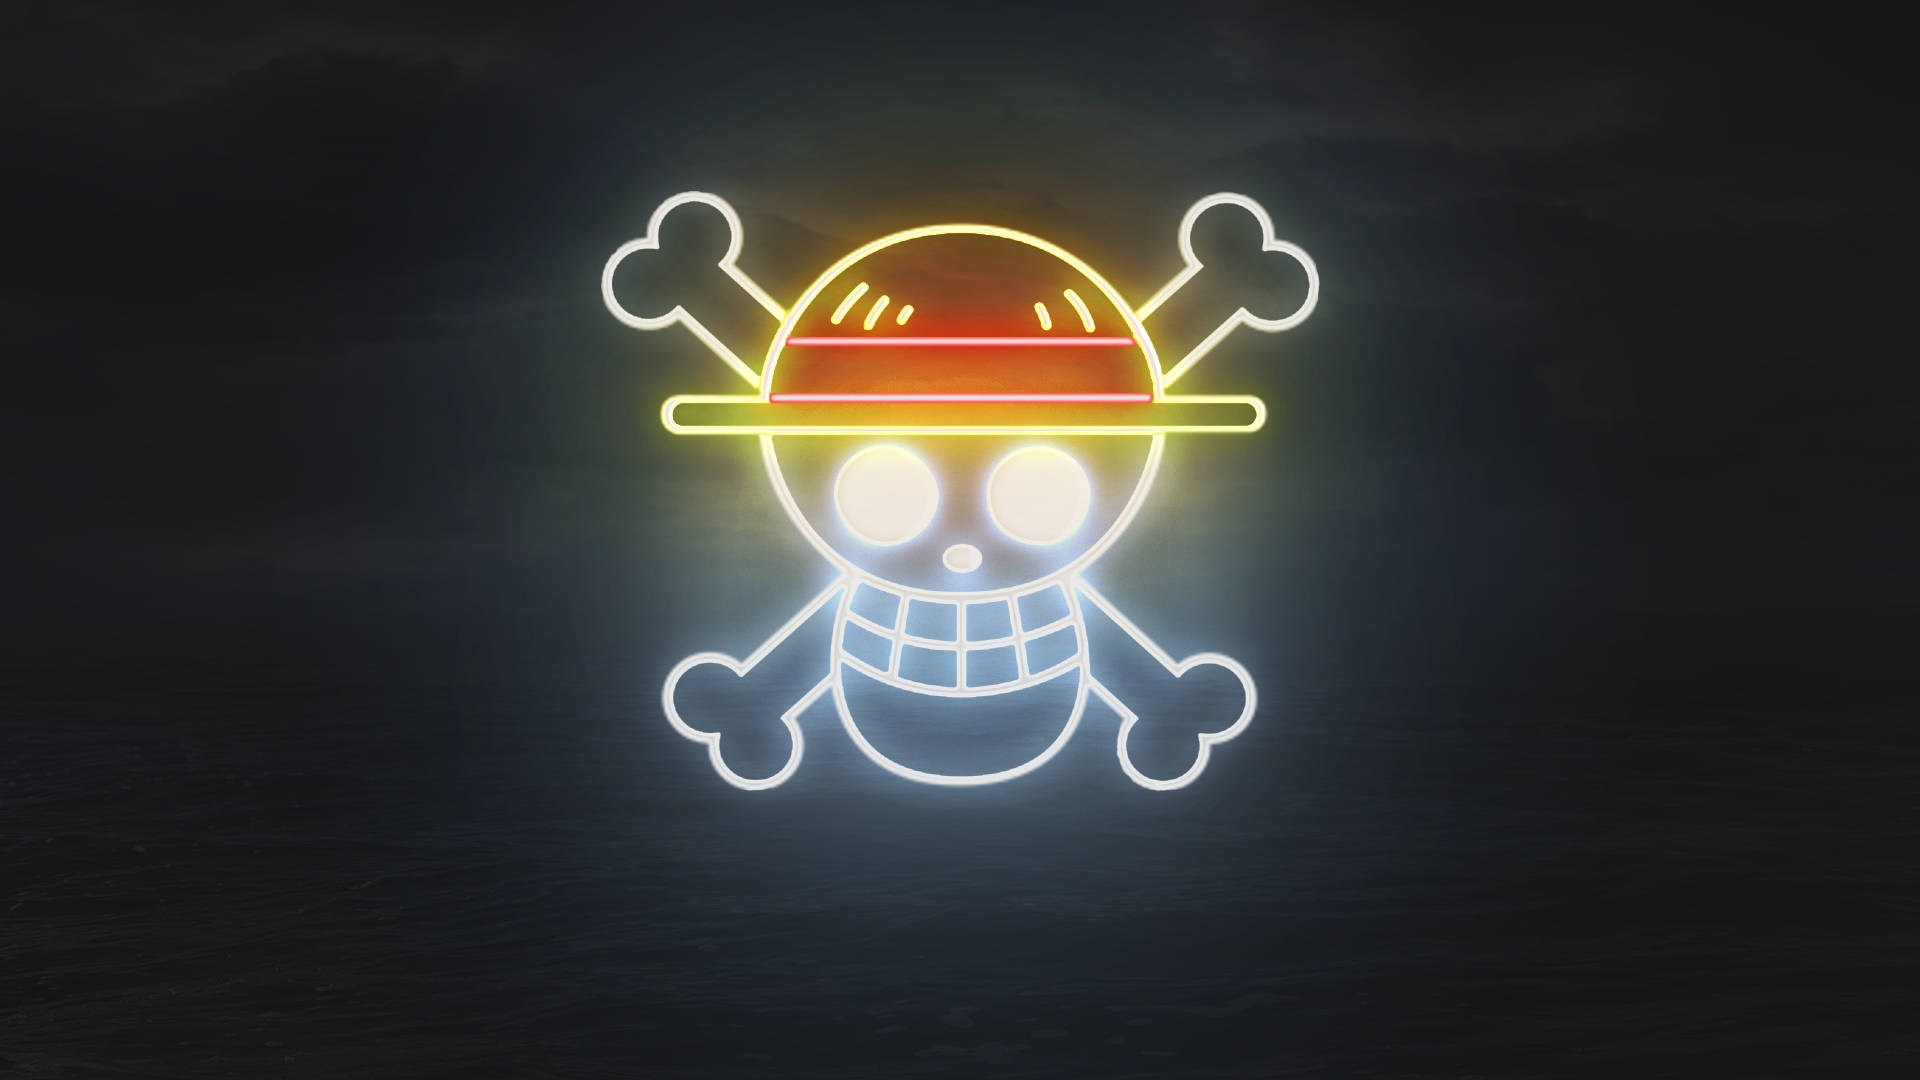 Download One Piece 4k Neon Light Logo Wallpaper